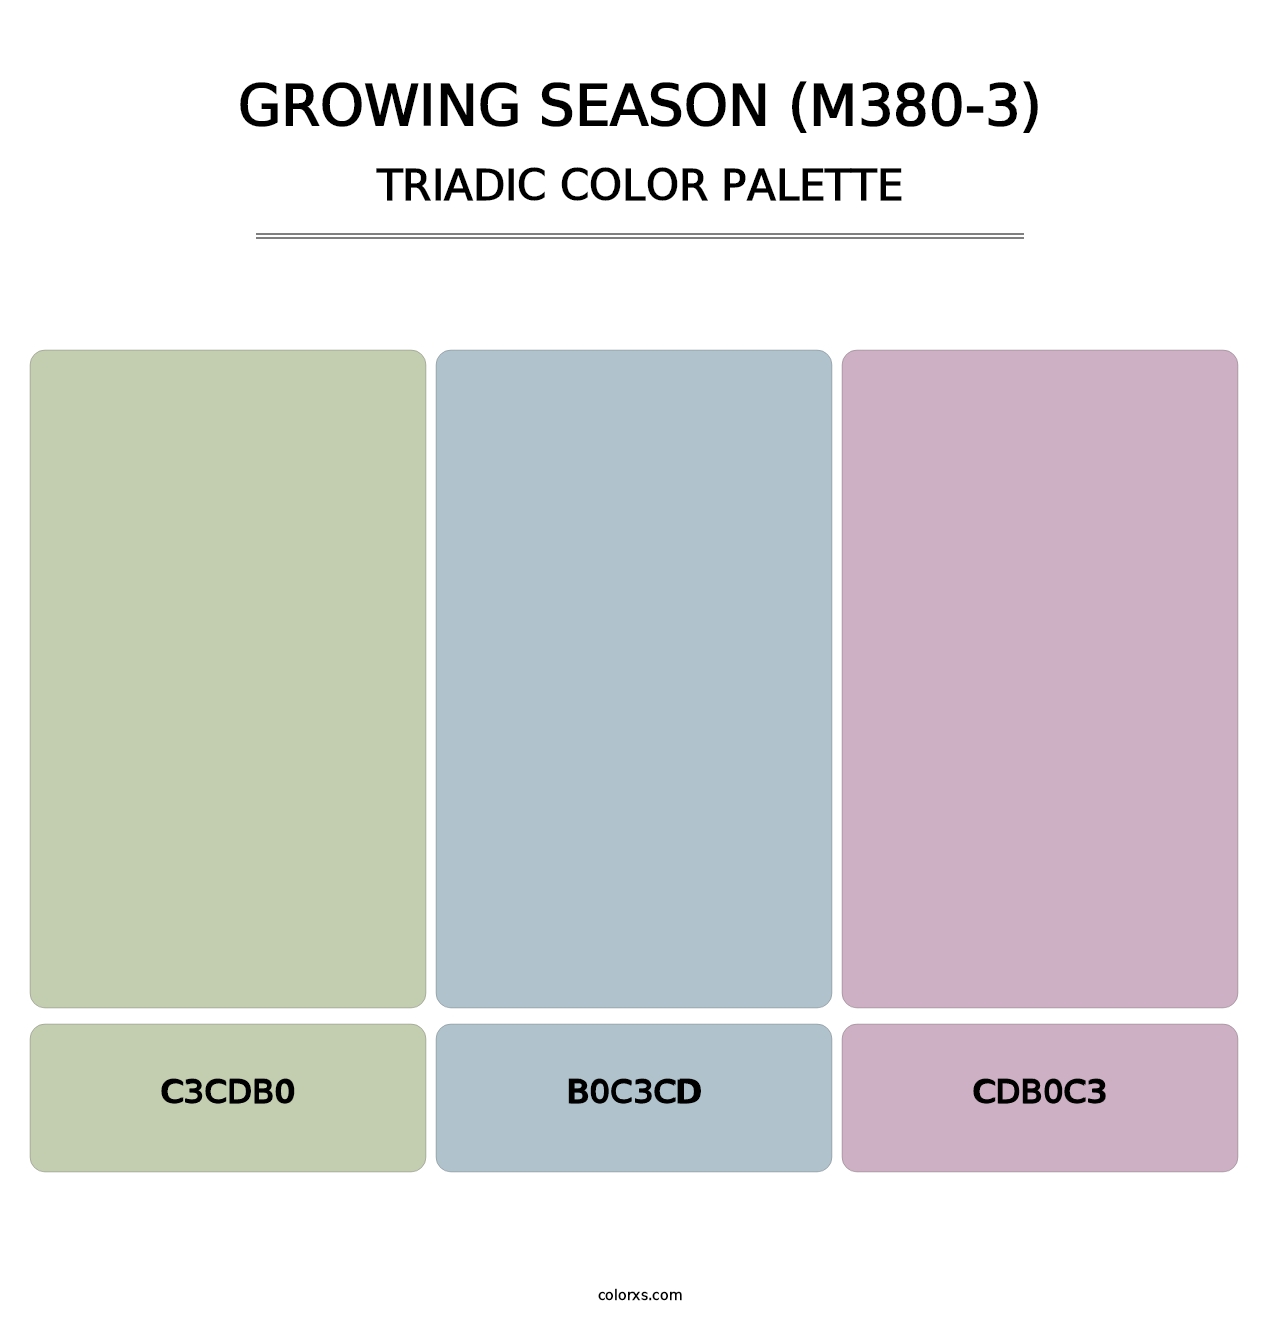 Growing Season (M380-3) - Triadic Color Palette